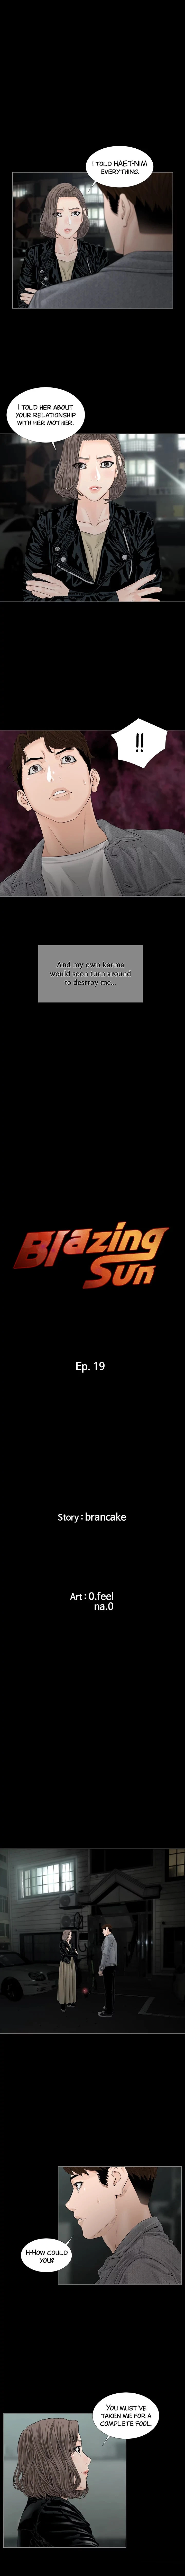 Blazing Sun - Chapter 19 Page 1